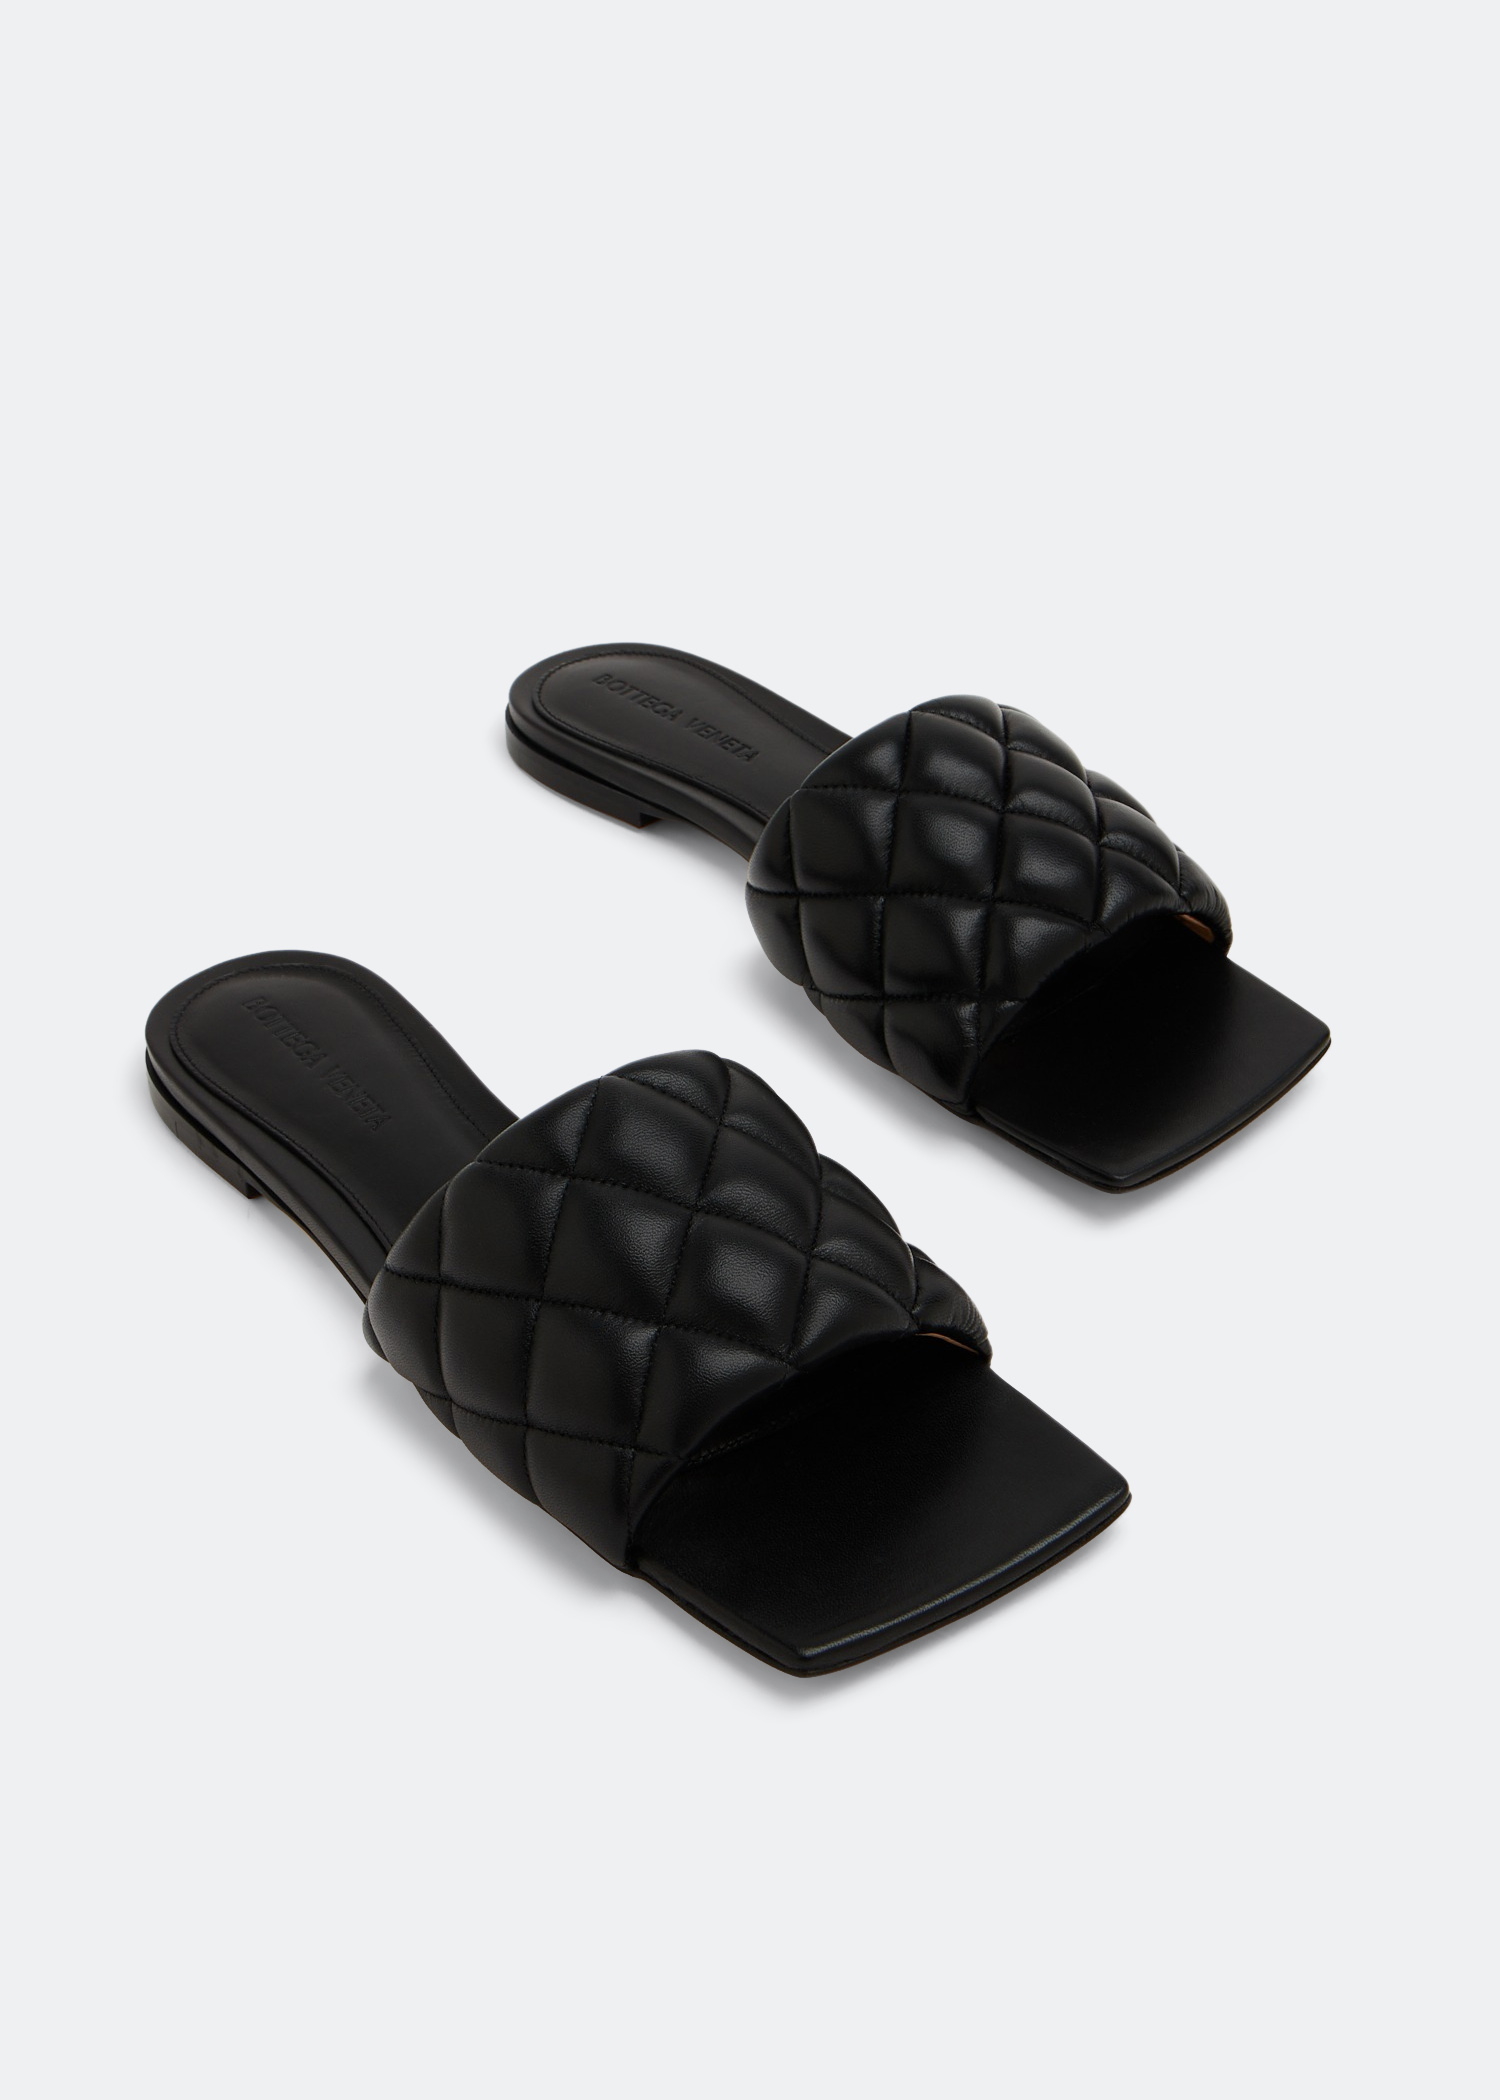 Discover more than 155 bottega veneta padded sandals super hot